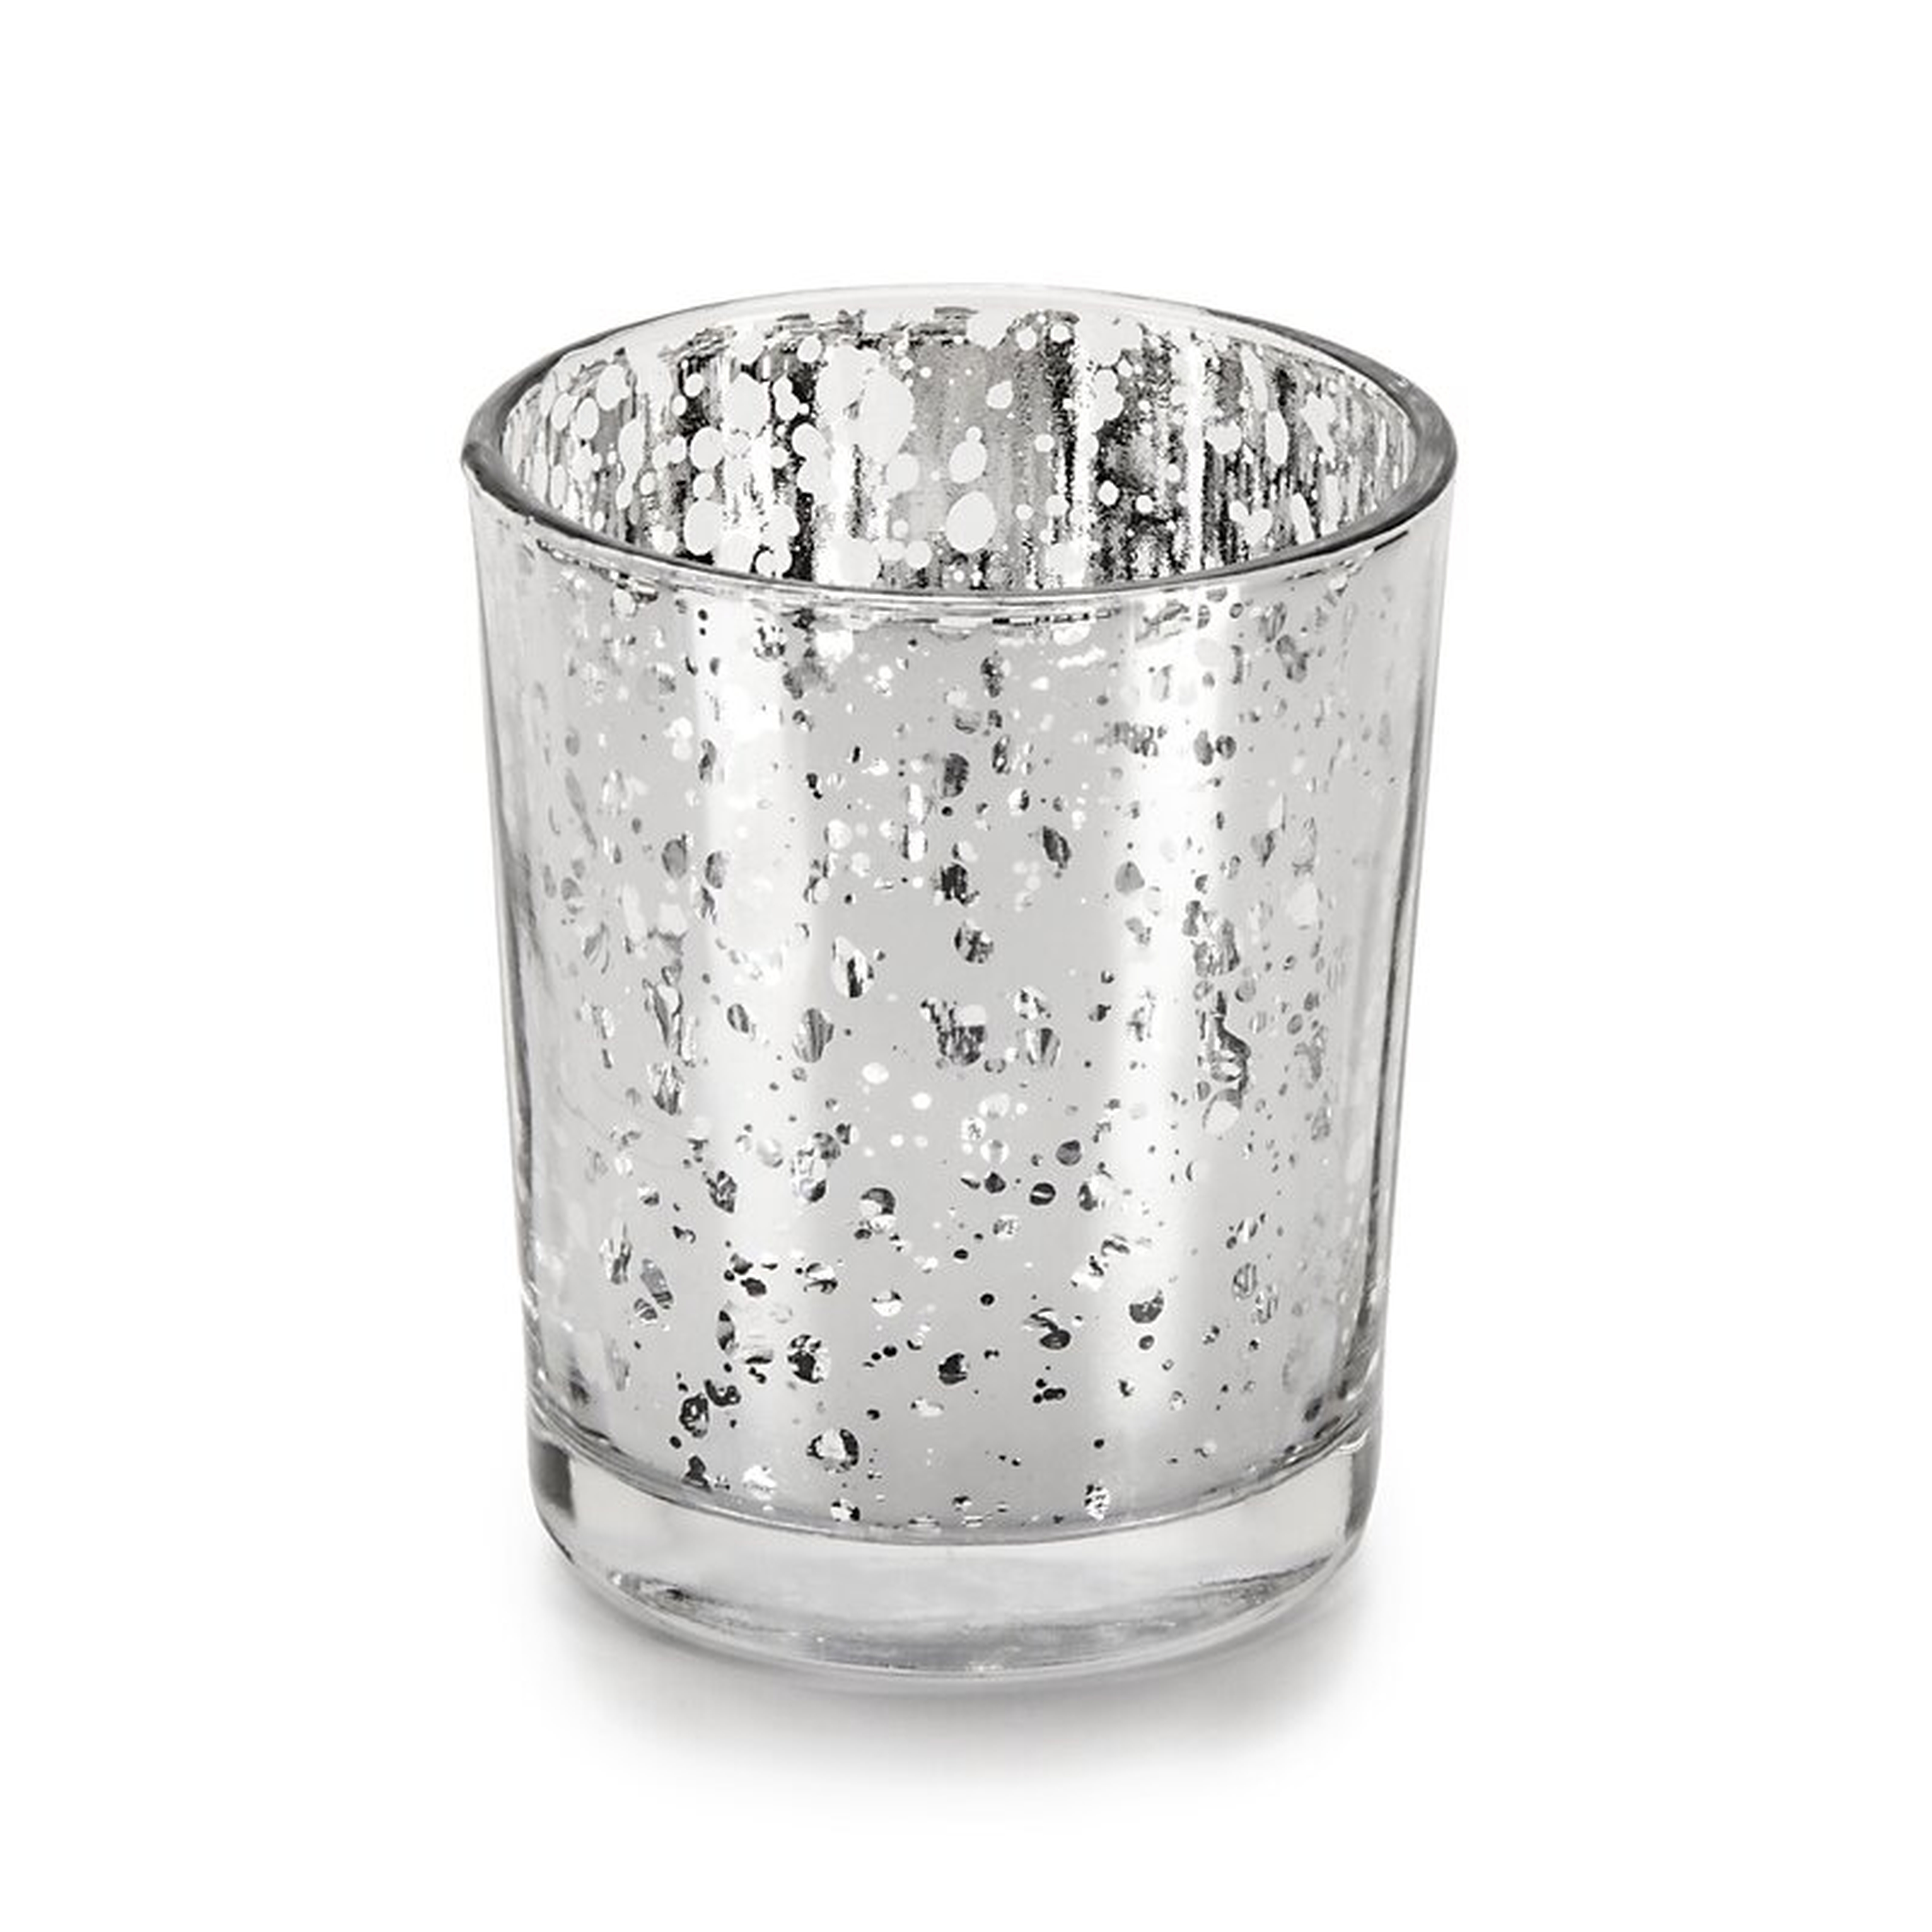 Rhinestone Trim Small Mercury Glass Votive Holder, set of 12 - Wayfair